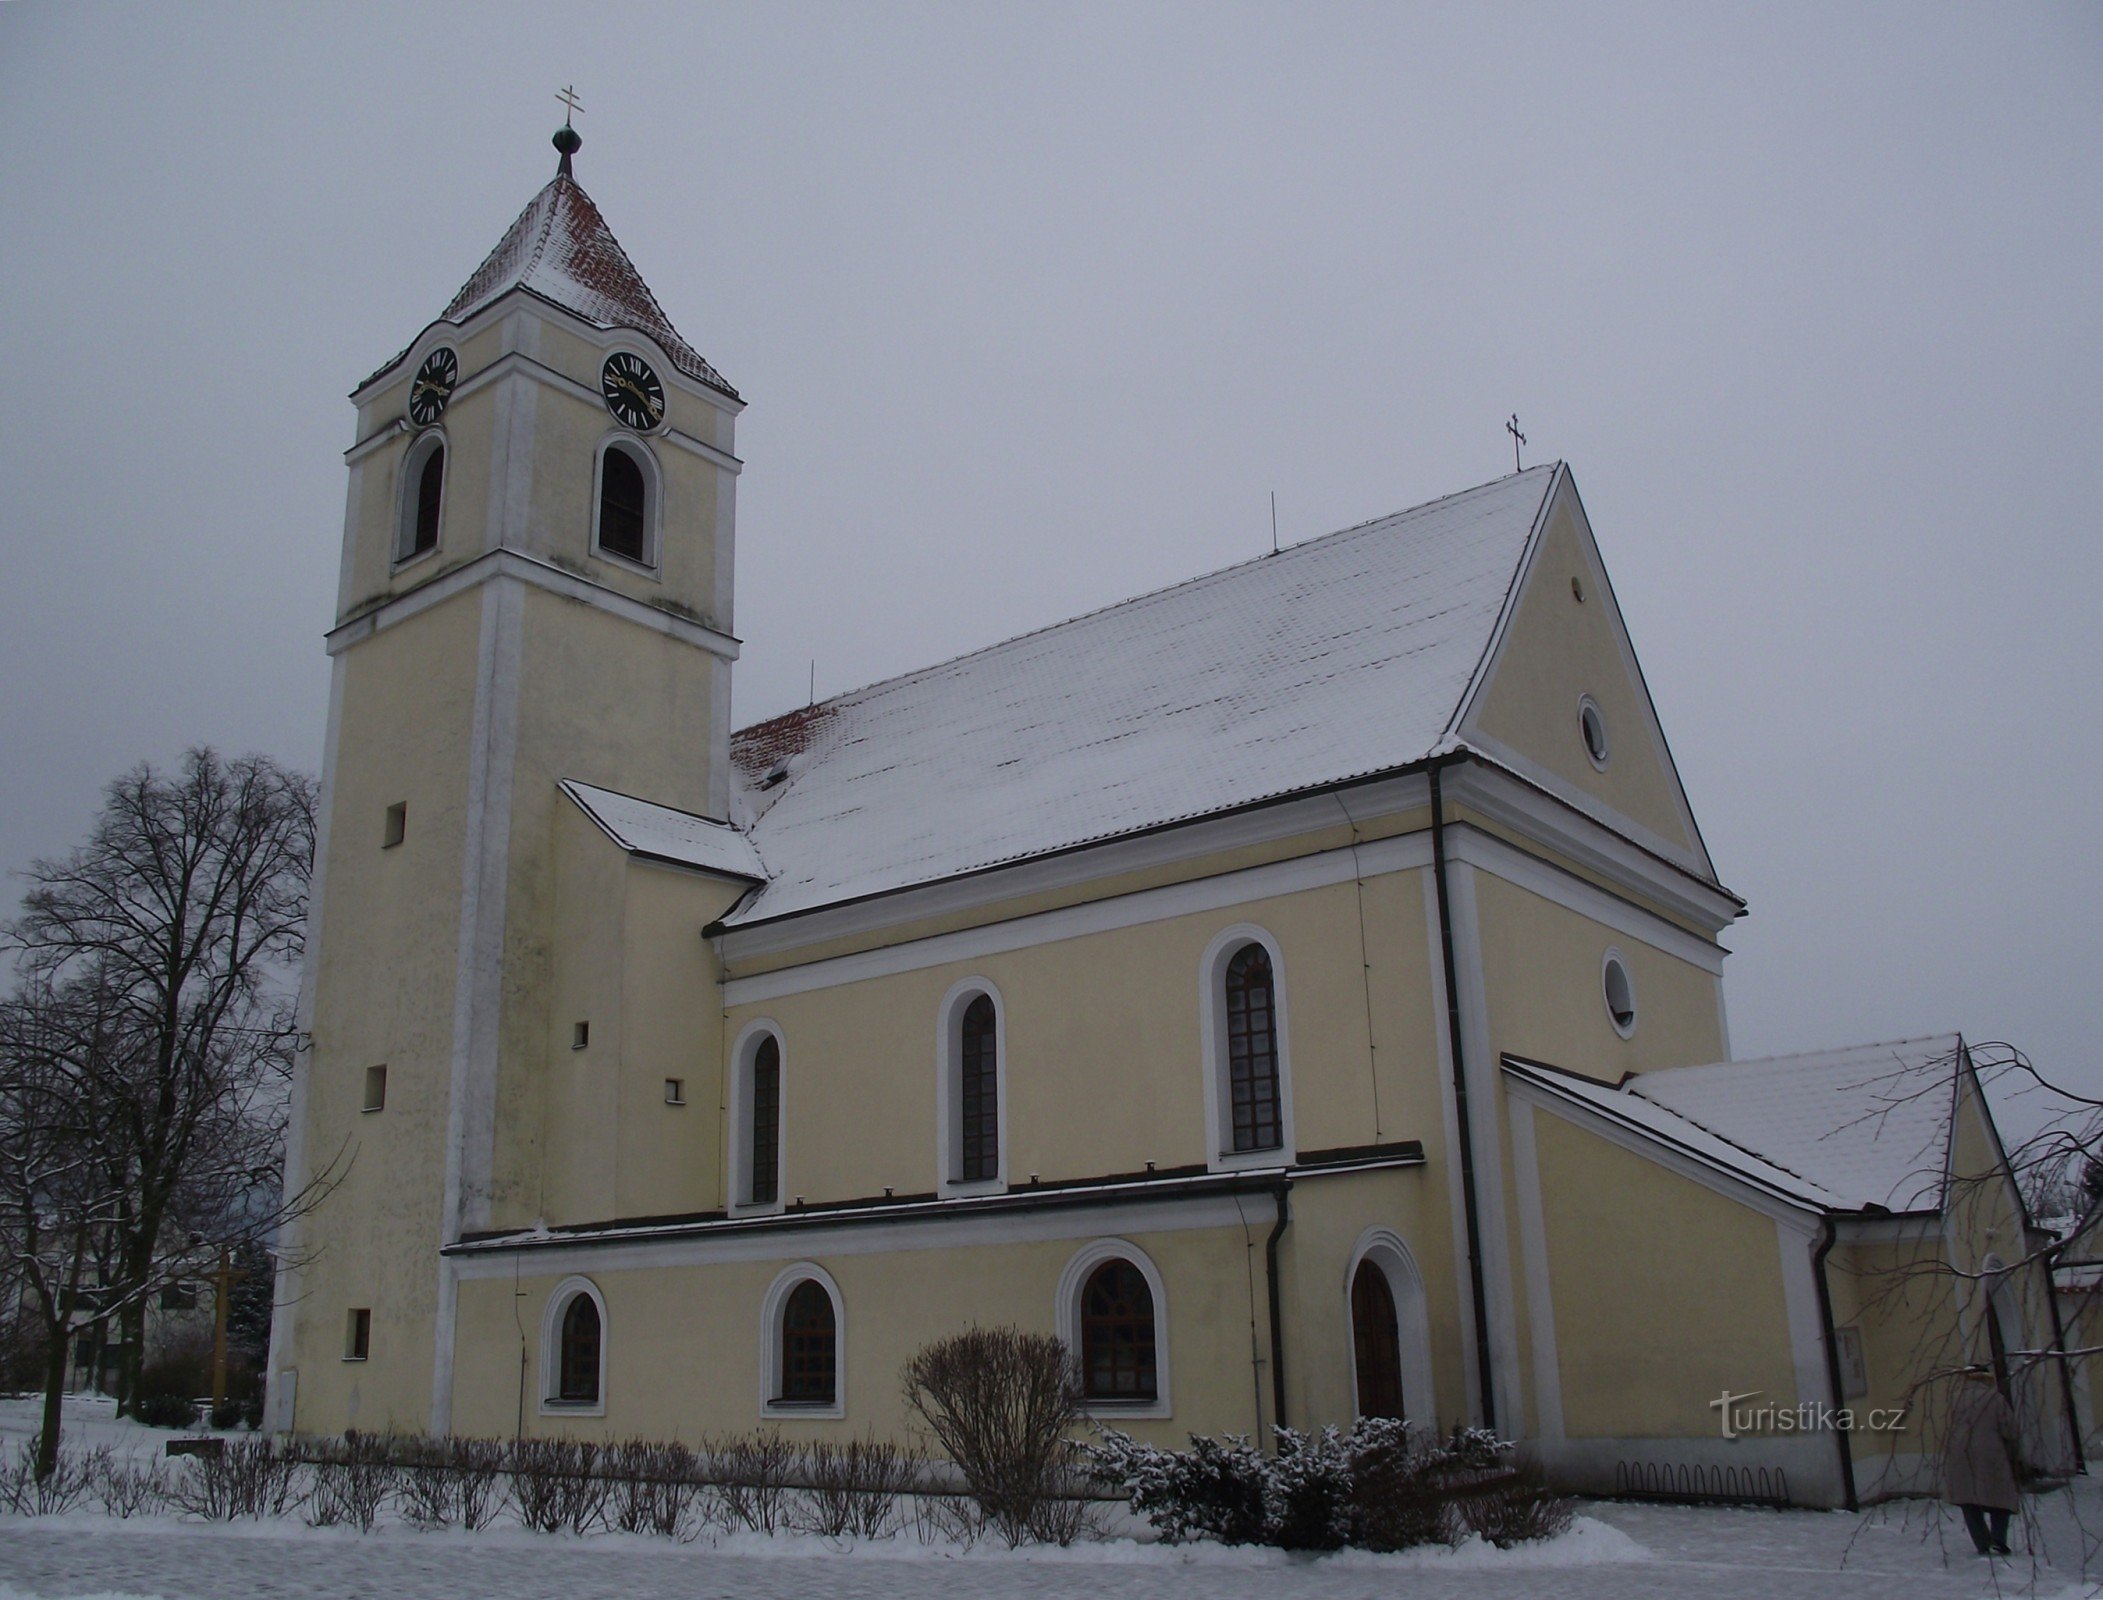 Cetkovice - iglesia de St. Felipe y Jacob